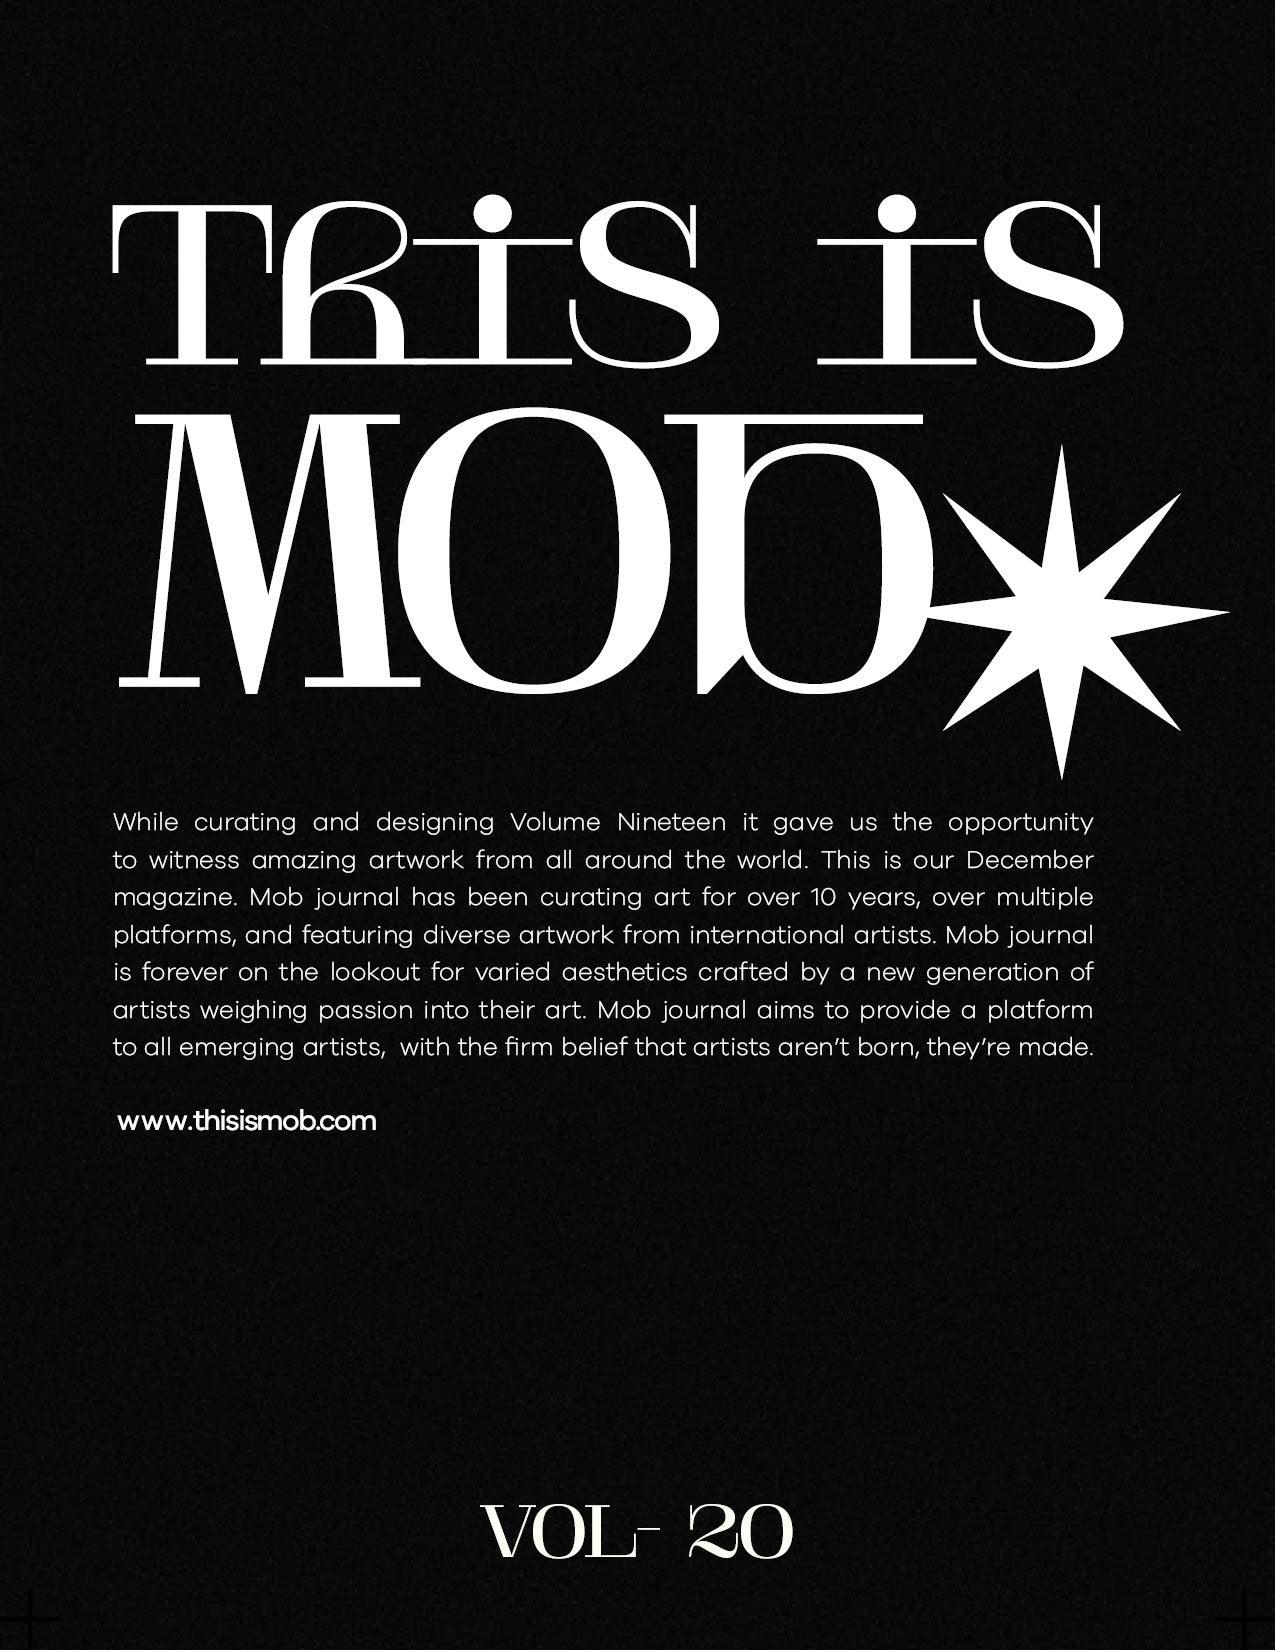 MOB JOURNAL | VOLUME TWENTY | ISSUE #53 - Mob Journal